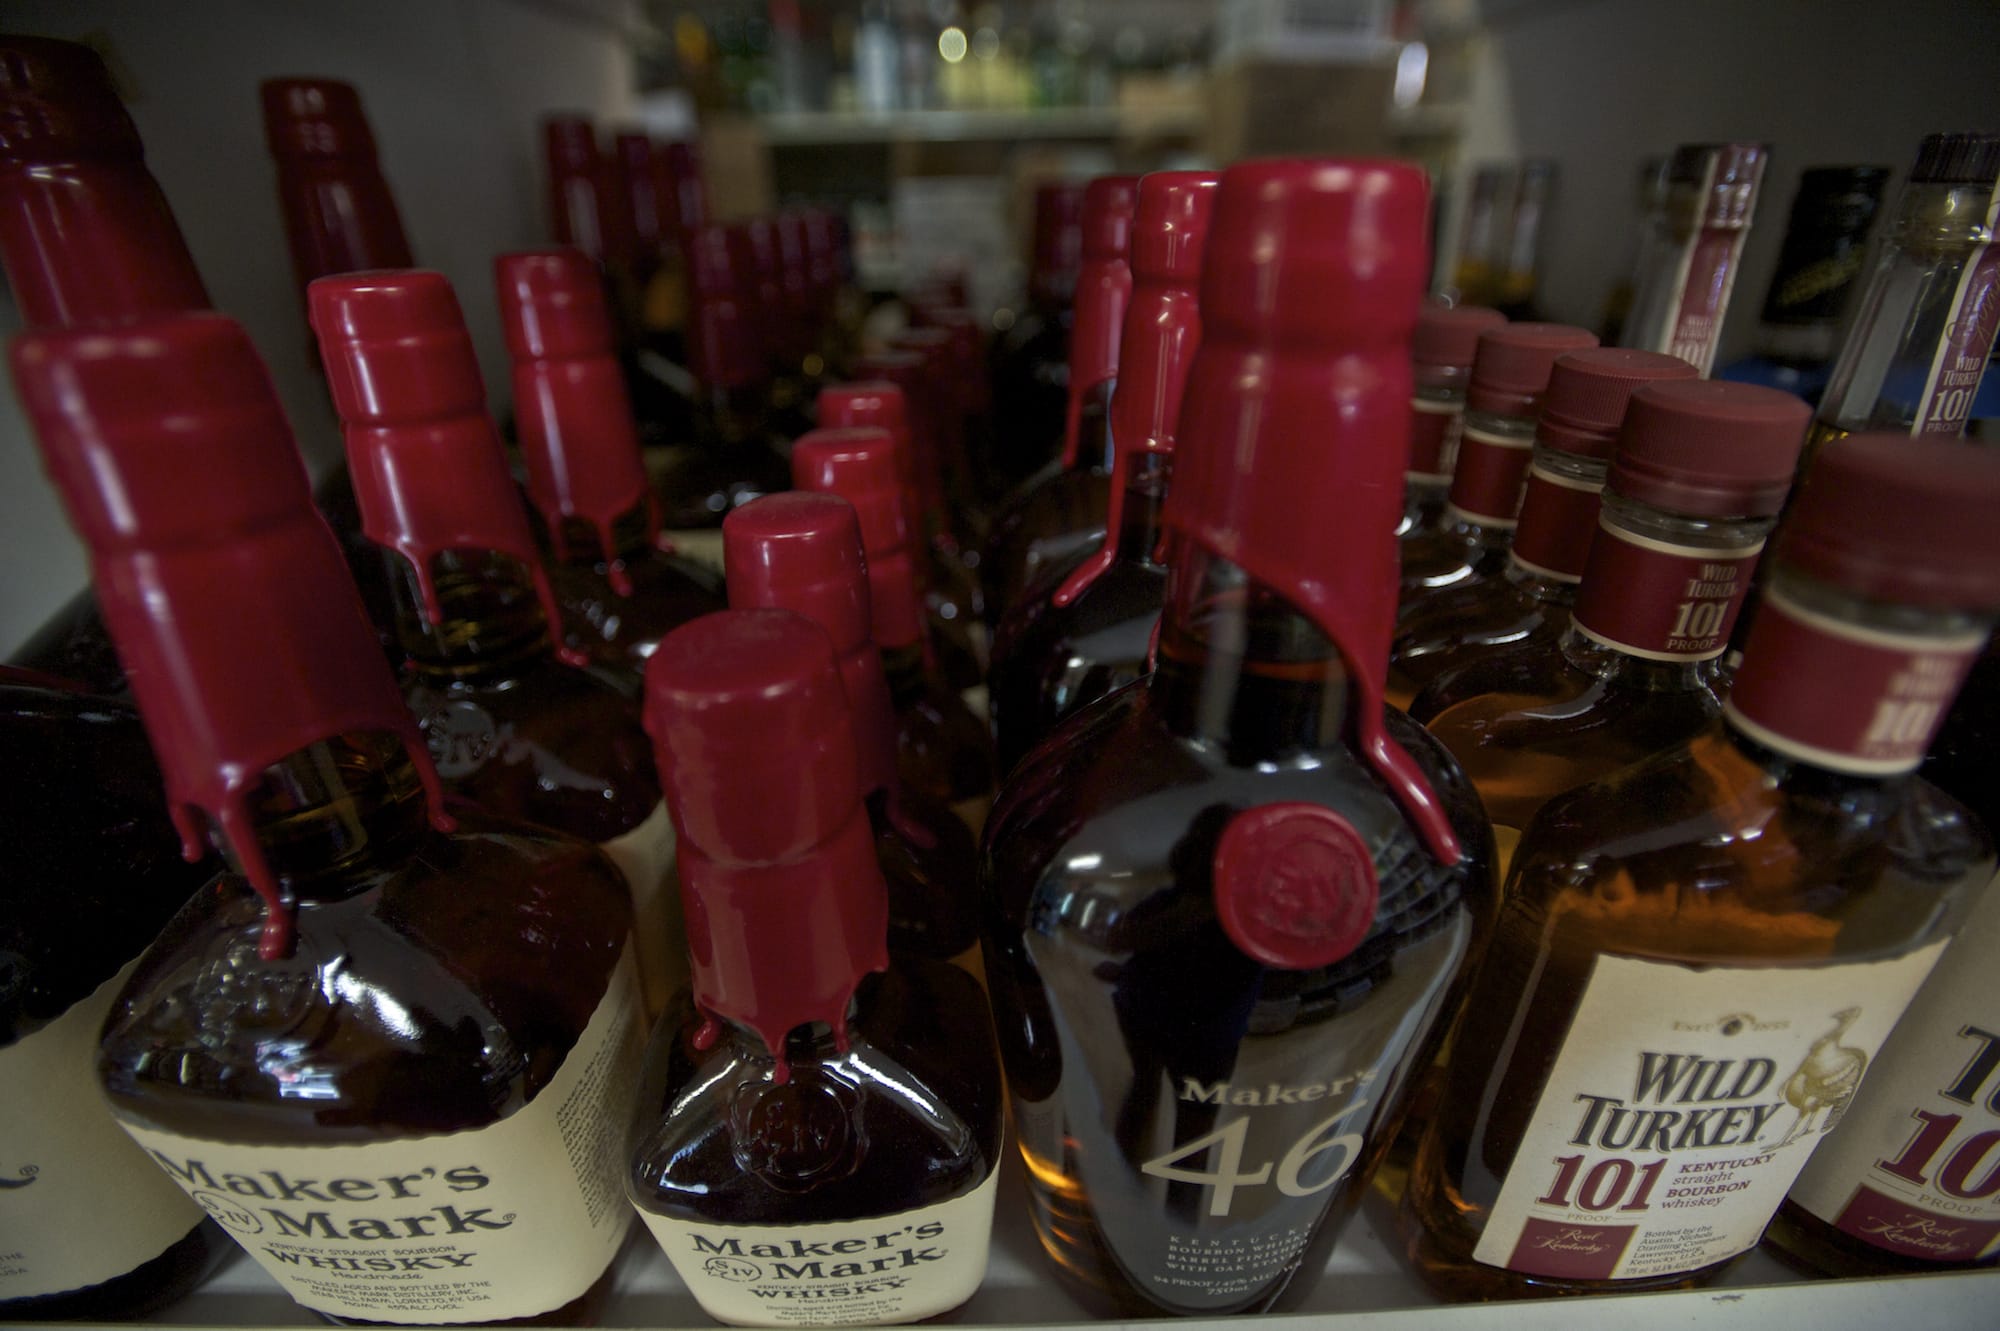 Initiative 1183 broadened the sale of hard alcohol in Washington.